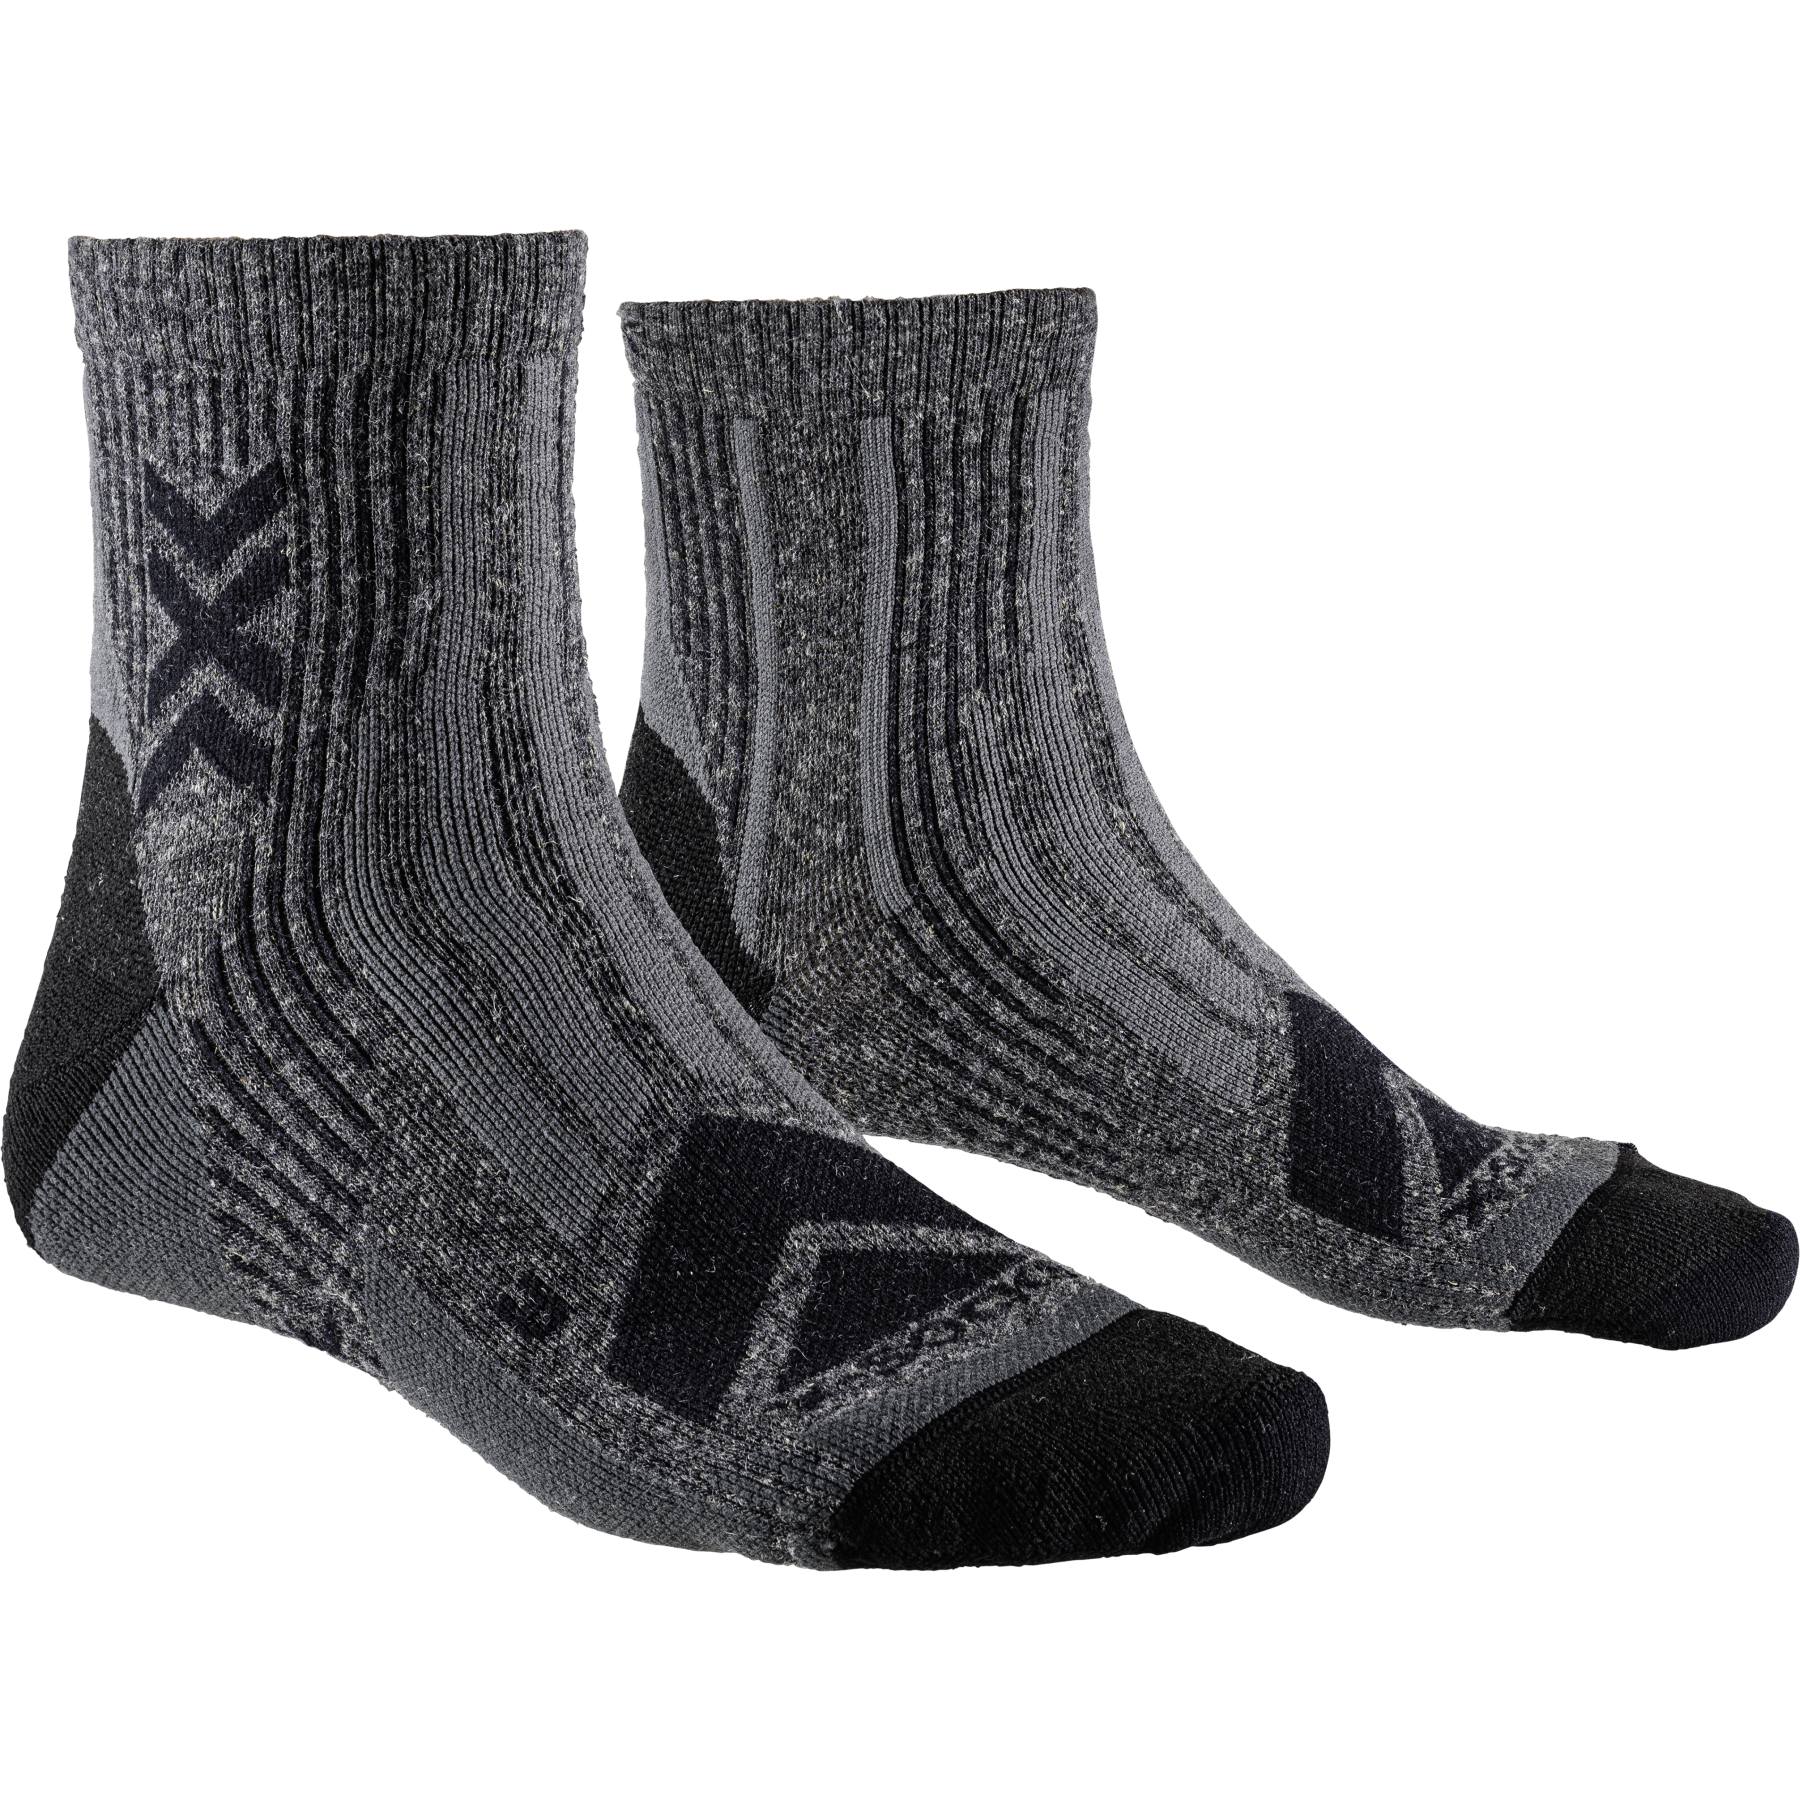 Picture of X-Socks Hike Perform Merino Ankle Socks - black/charcoal